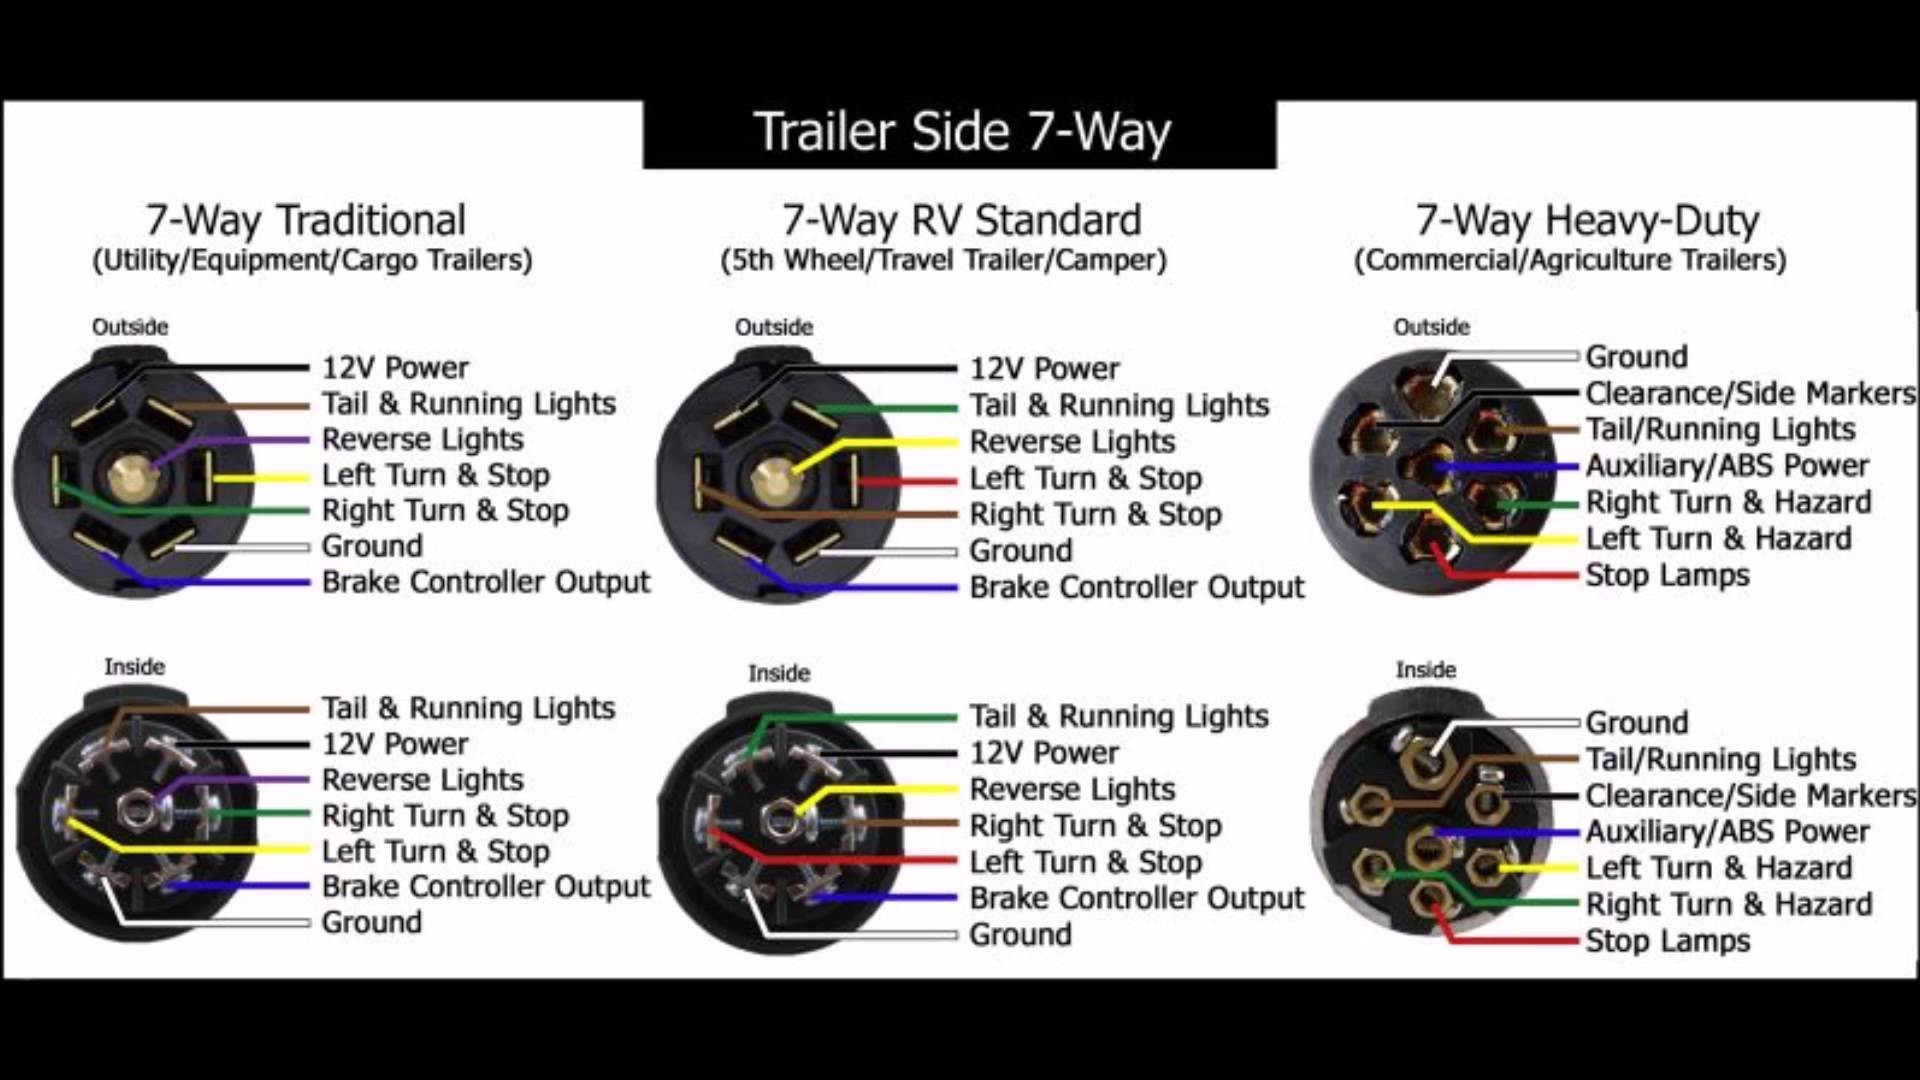 Trailer Wiring Diagram 7 Way Plug 7 Way Trailer Wiring Diagram Autoctono Of Trailer Wiring Diagram 7 Way Plug